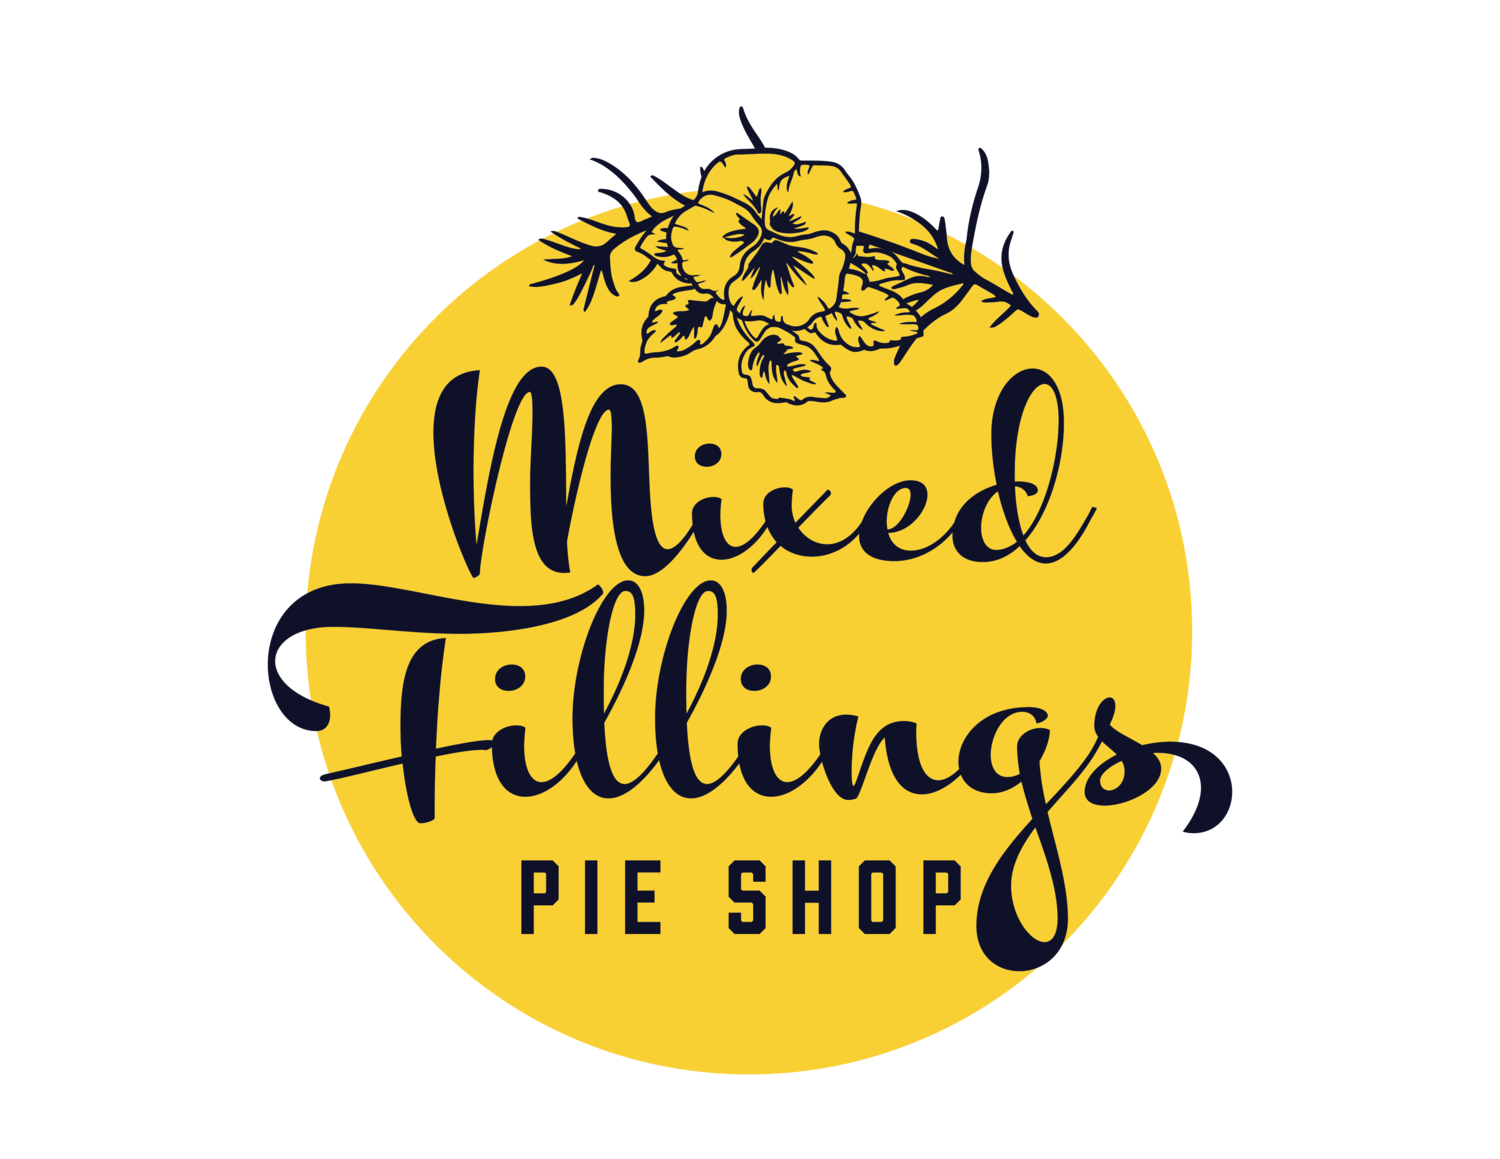 Mixed Fillings Pie Shop